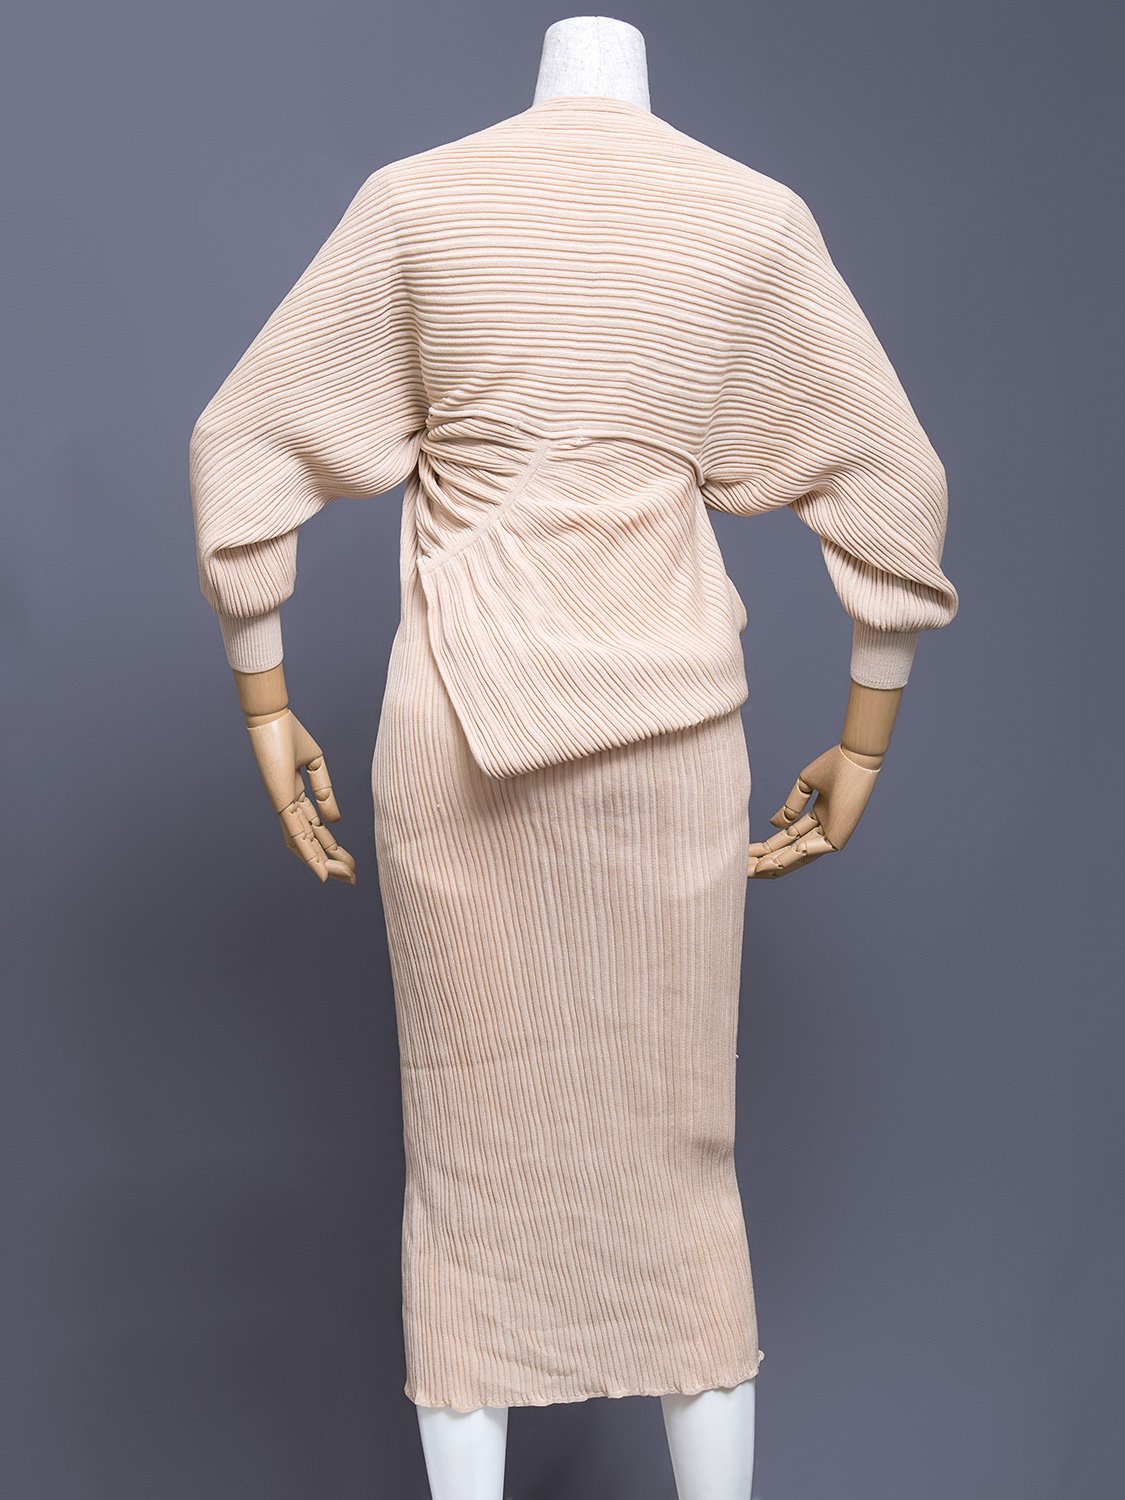 Issey Miyake Asymmetrical Wrap Dress, 1980s | Japanese Fashion Archive